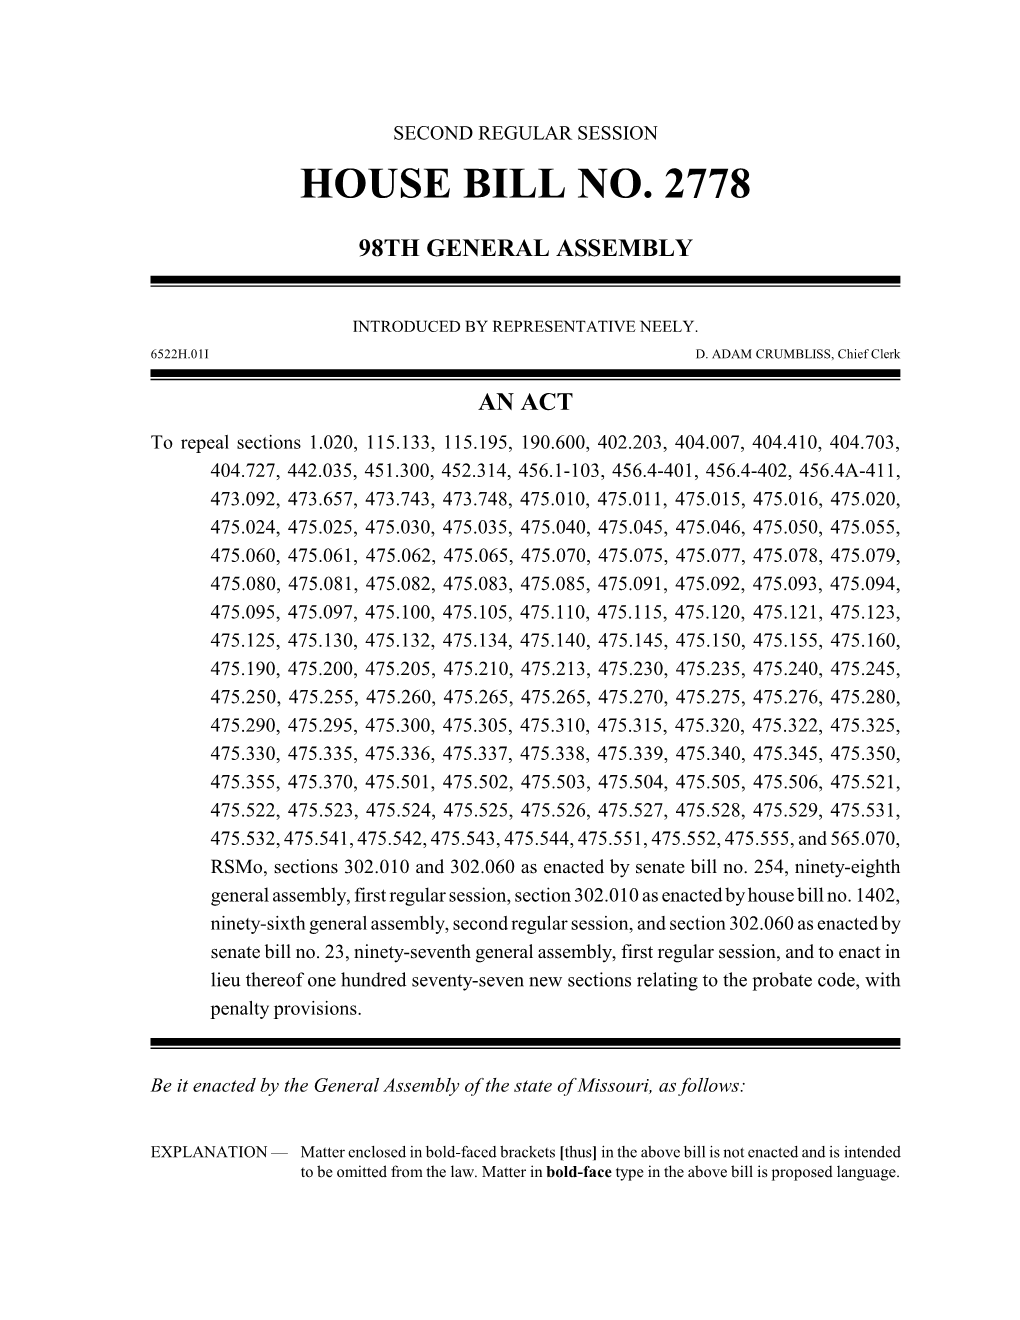 House Bill No. 2778